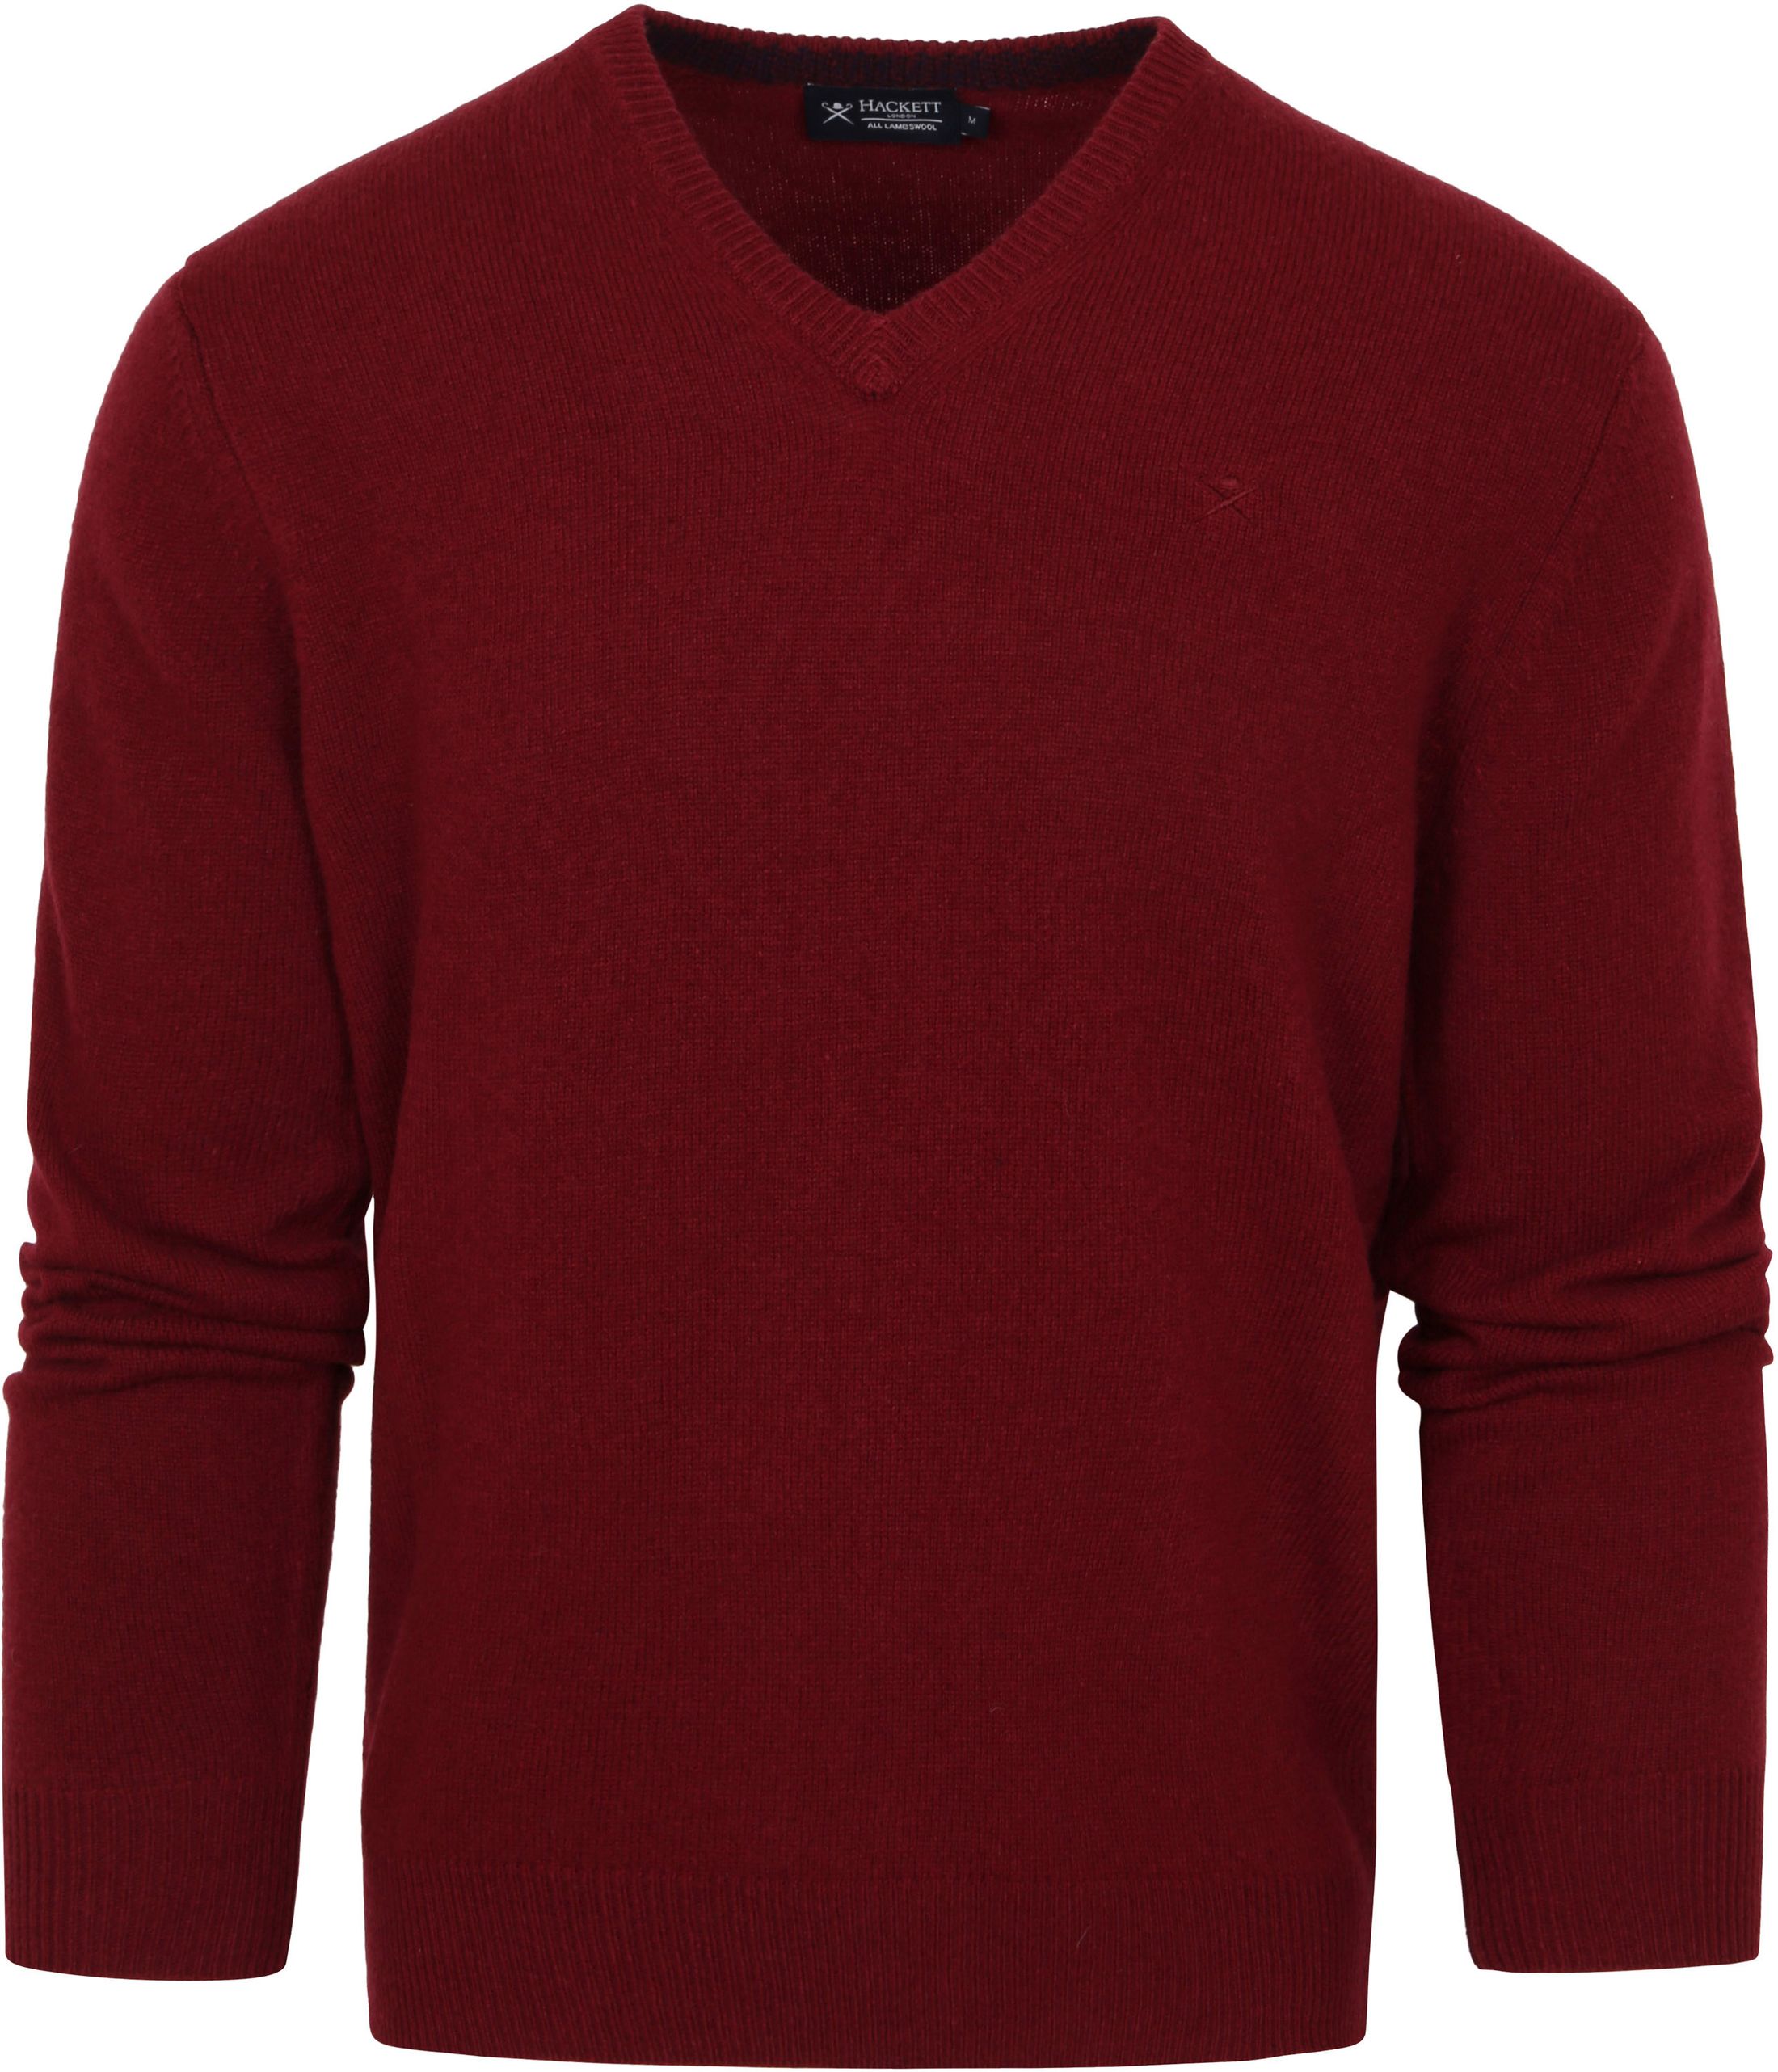 Hackett Lambswool Sweater Bordeaux Burgundy Red size L